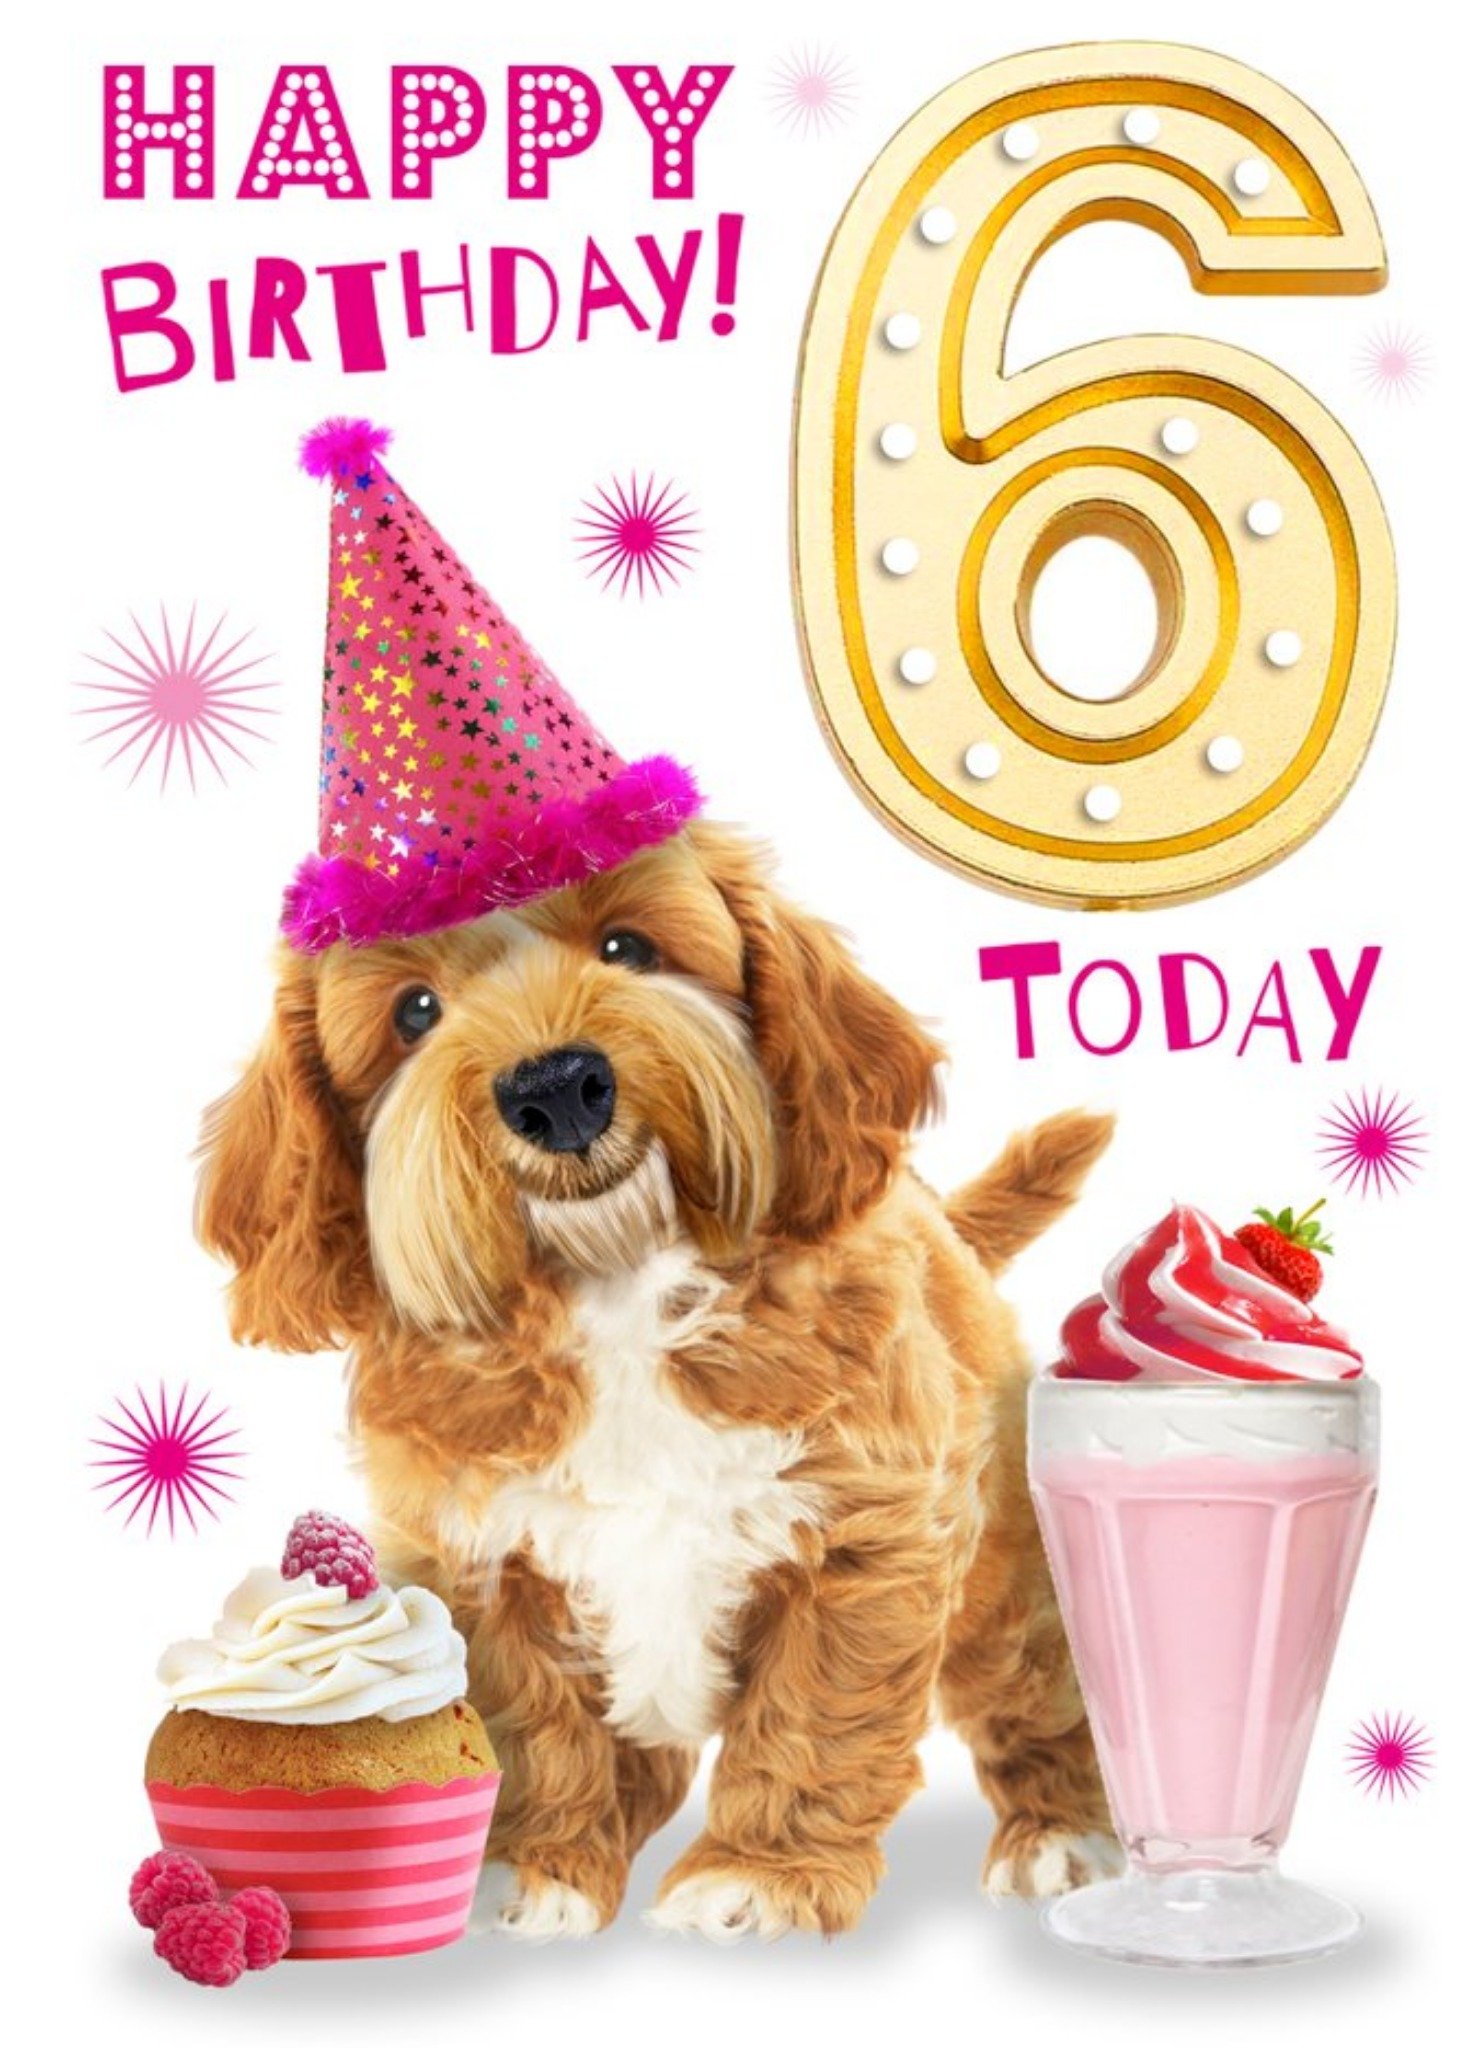 Moonpig Cute Dog With Cupcake 6th Birthday Card, Large